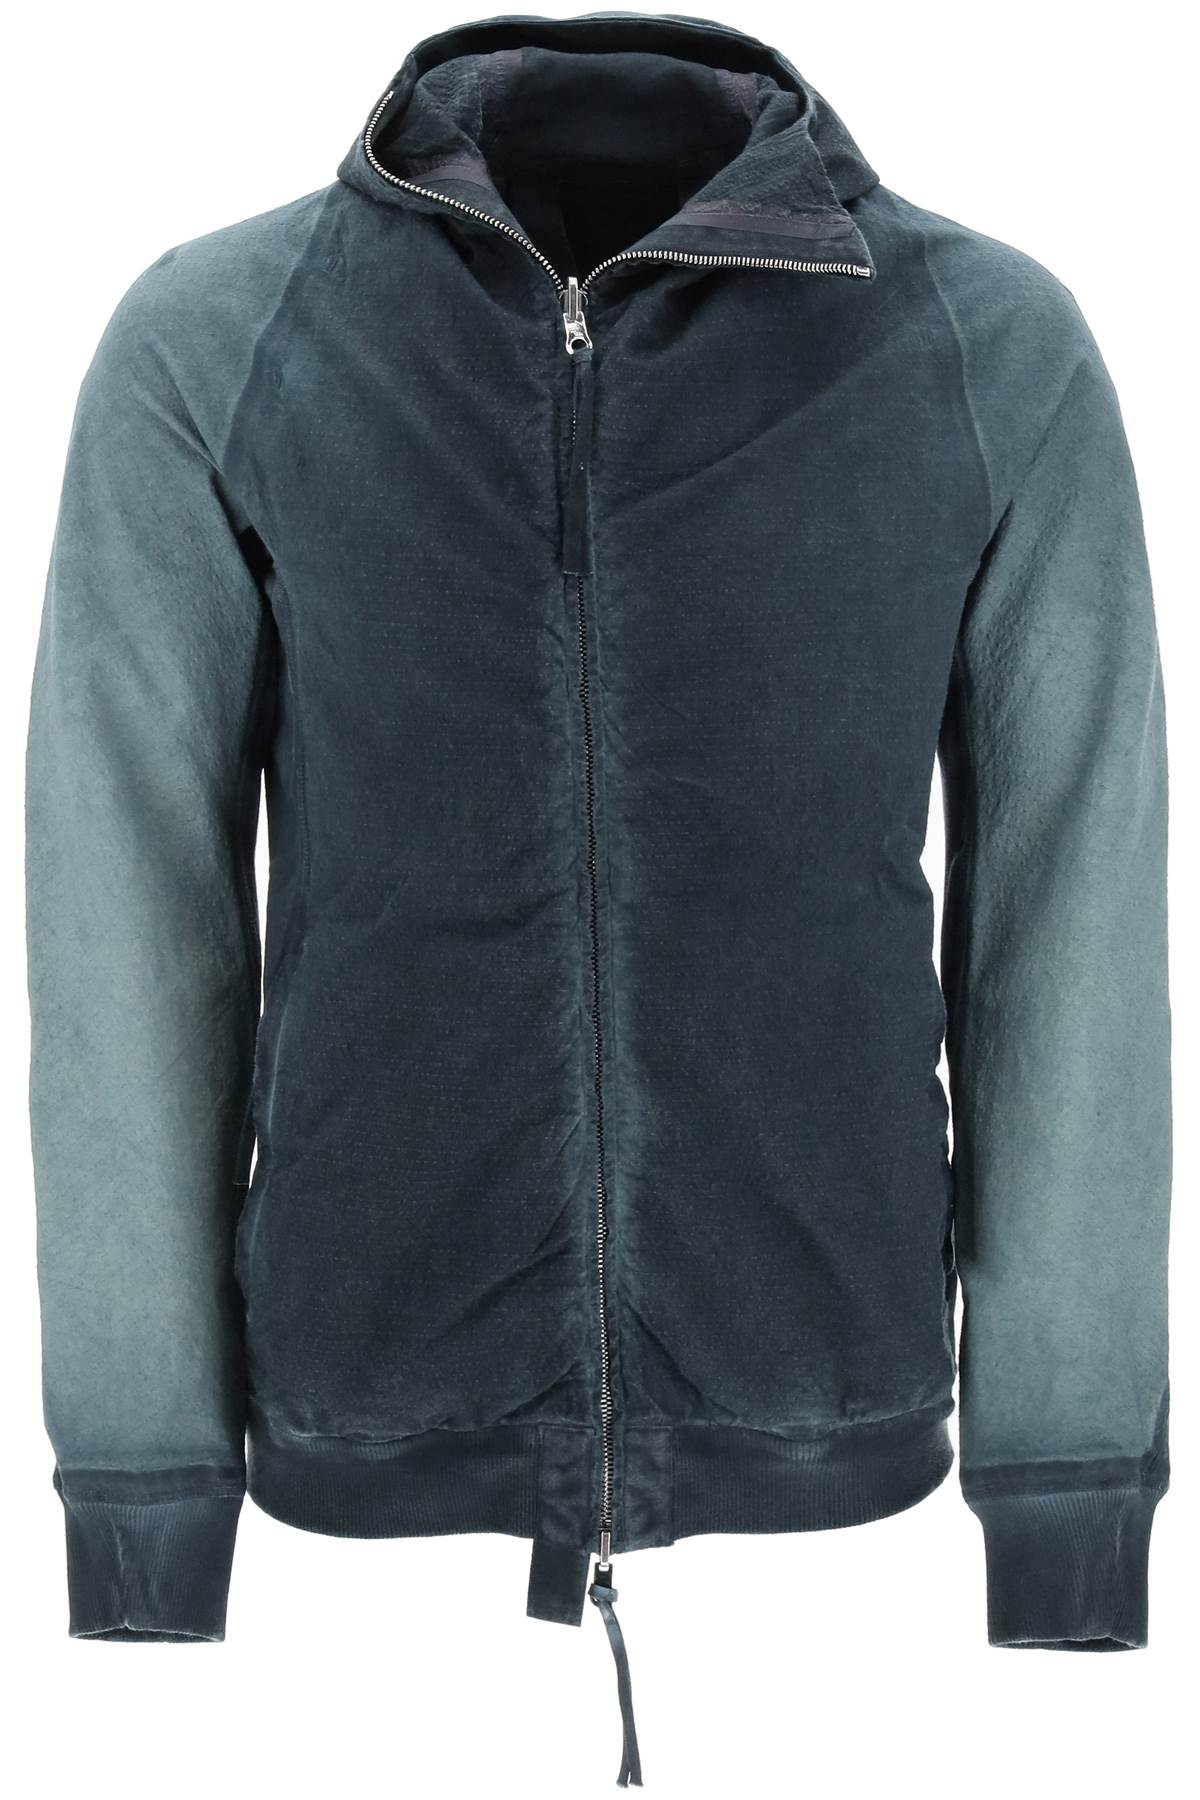 Boris bidjan saberi hybrid sweatshirt with zip and hood-0